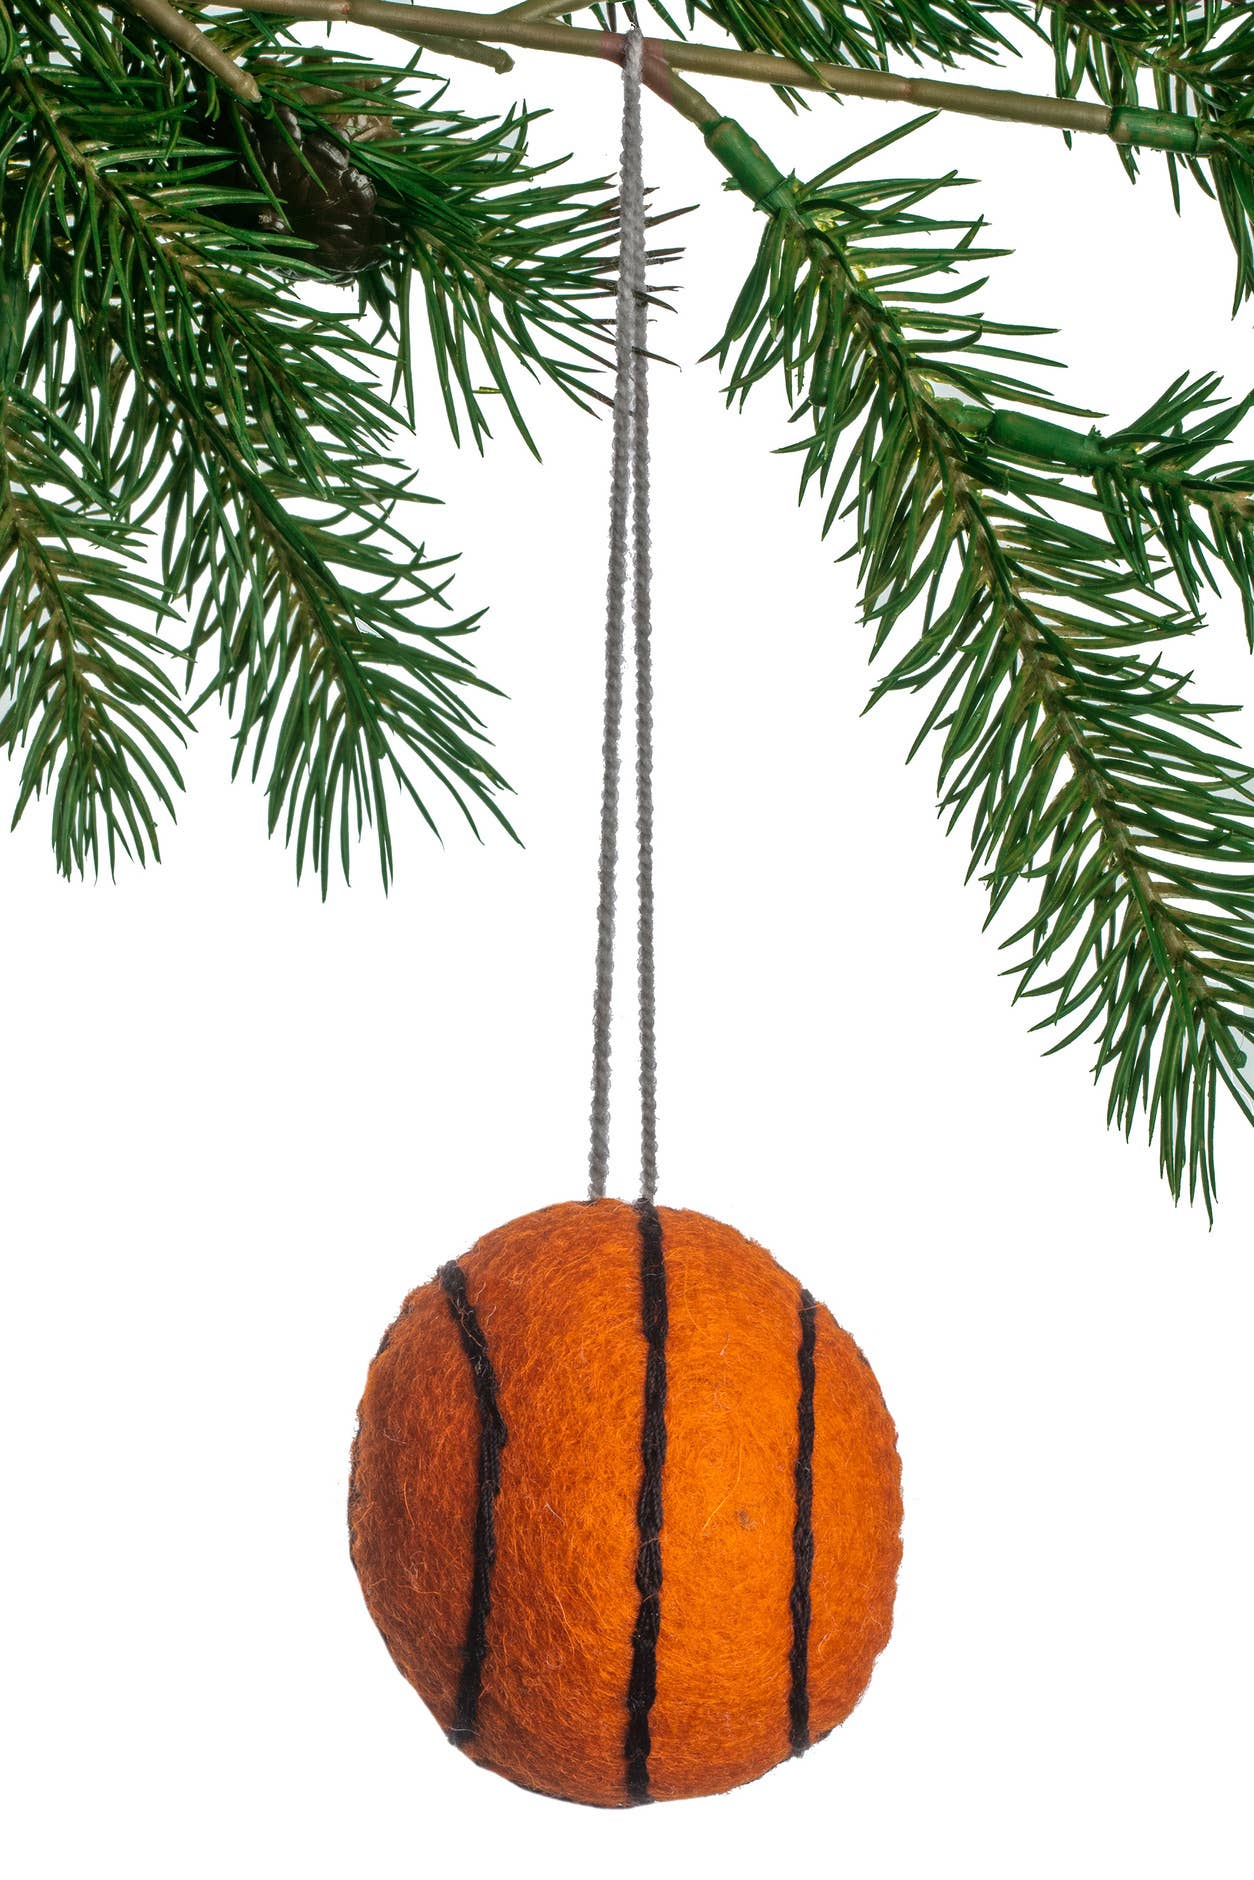 Basketball Ornament